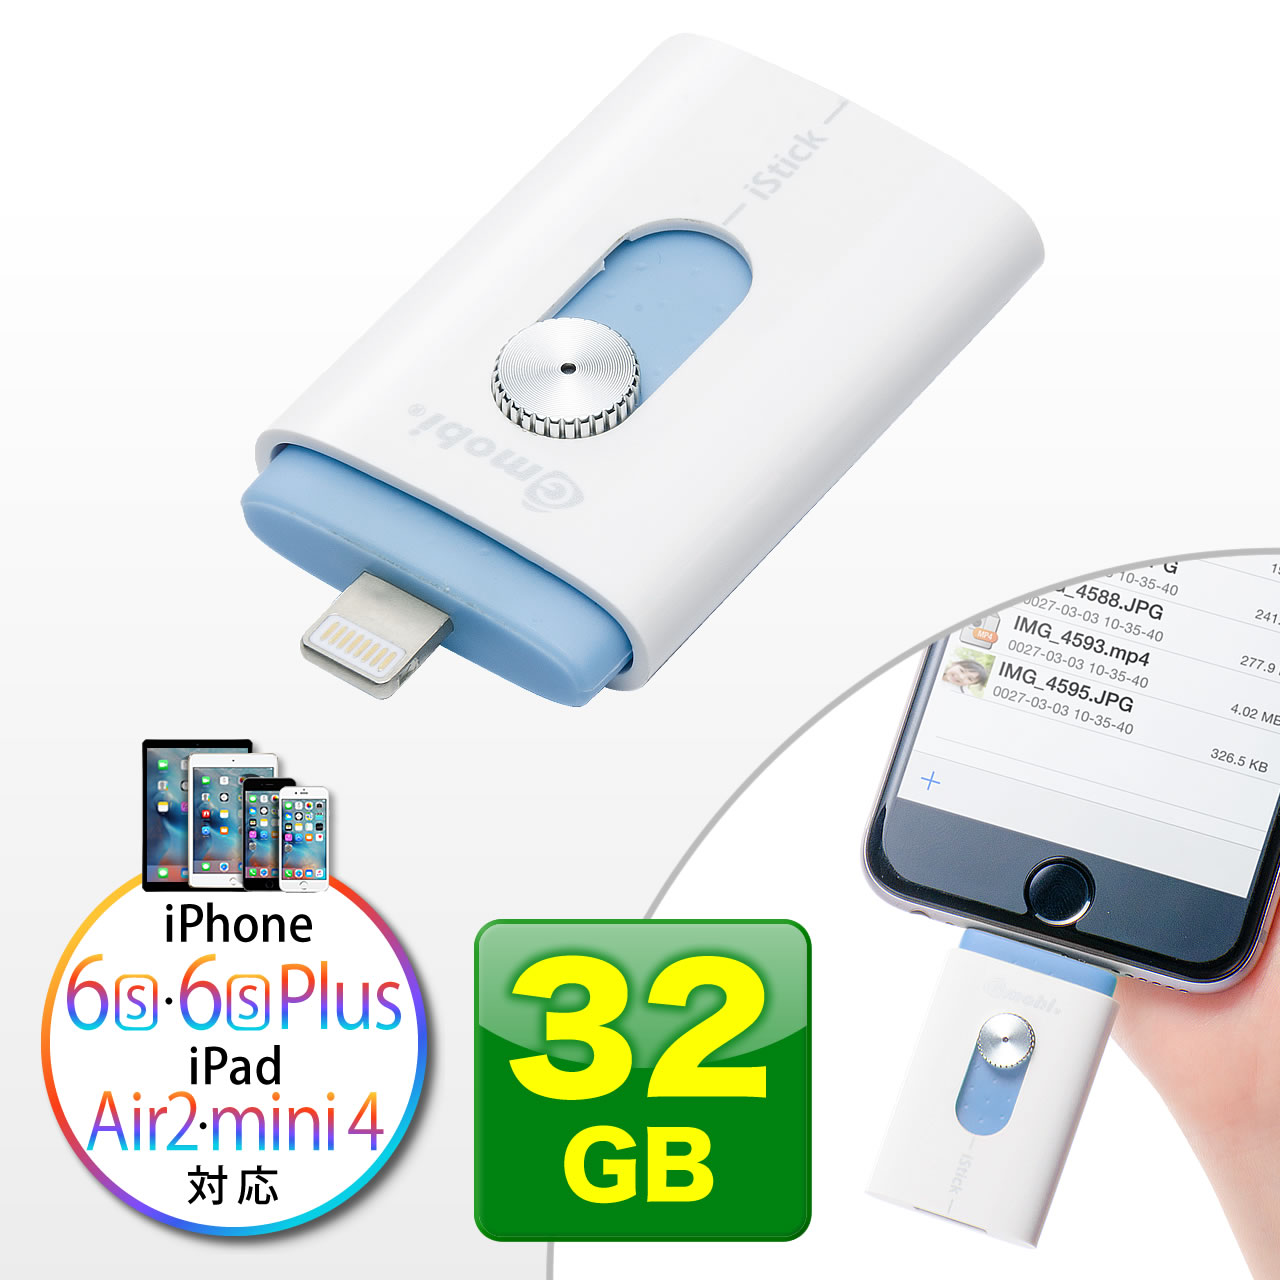 iPhoneEiPad USB 32GBiLightningΉEGmobi iStickj 600-IPL32GL